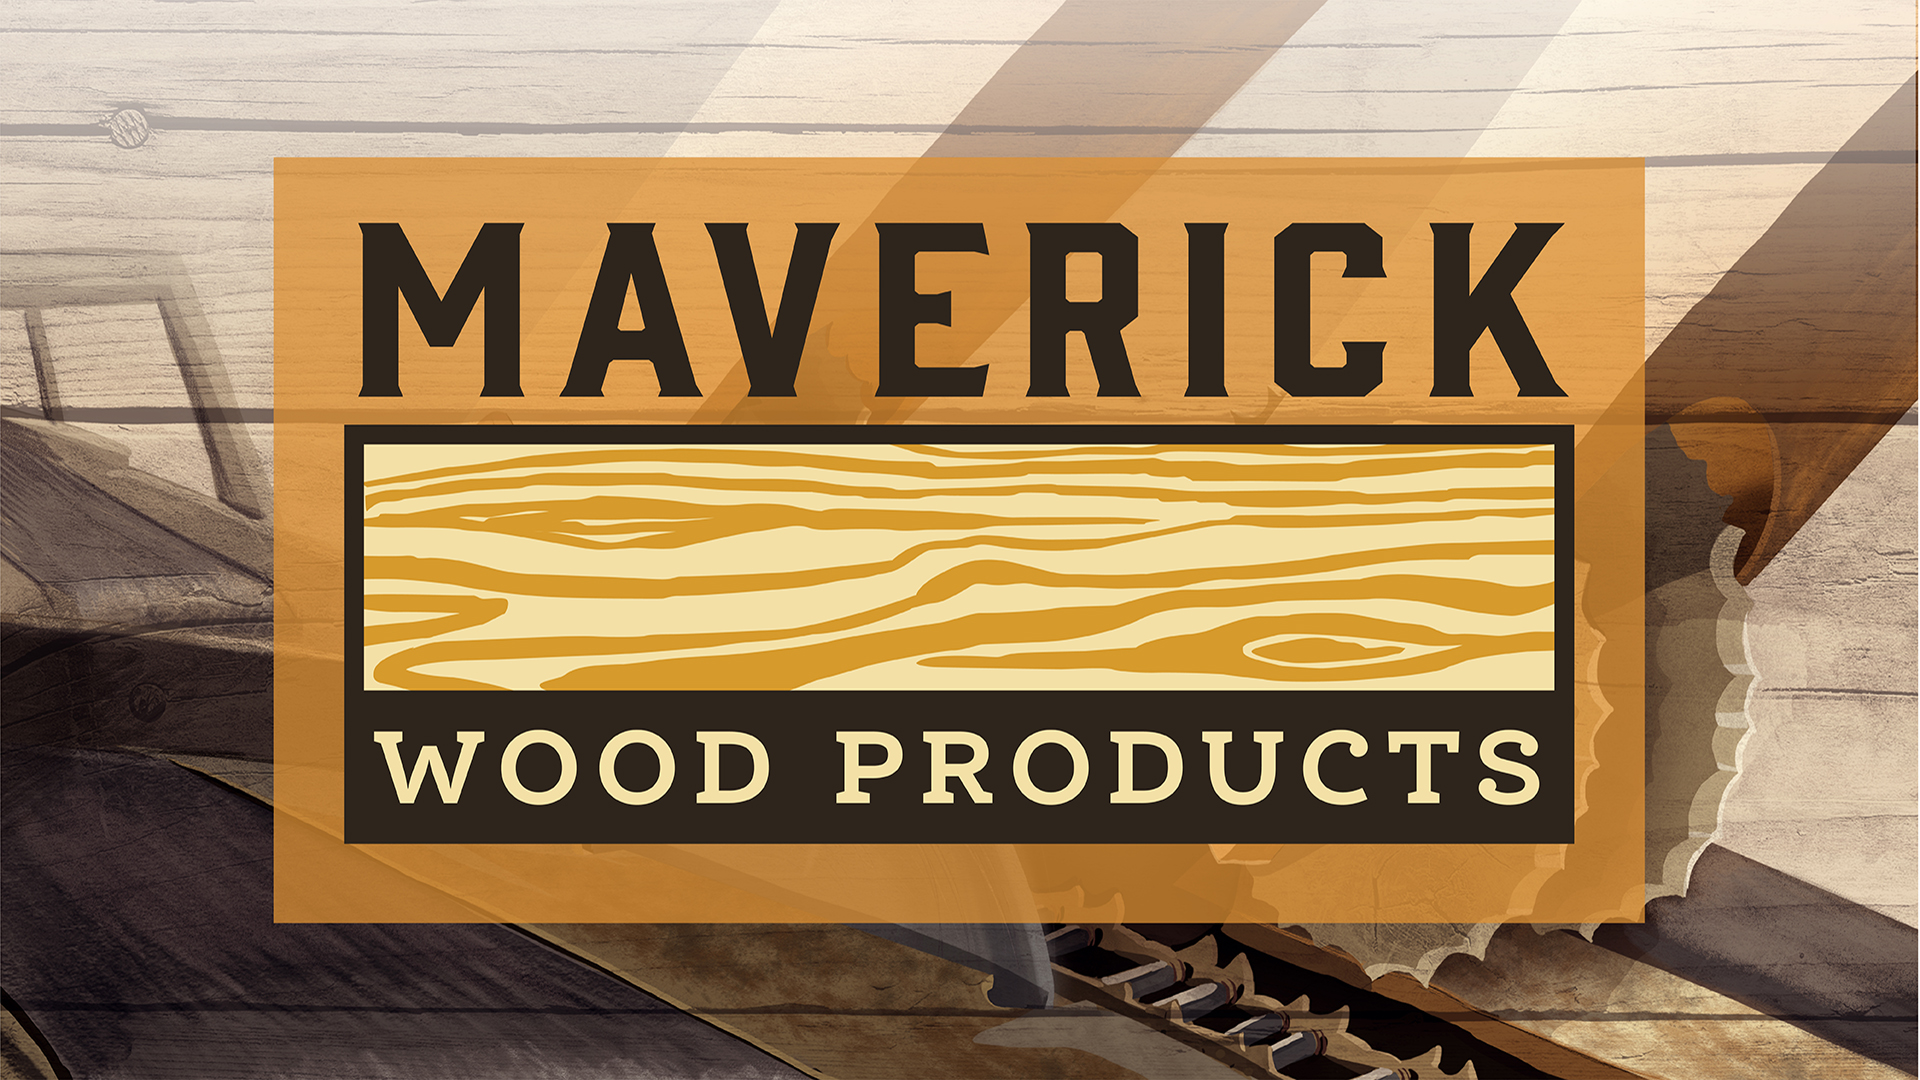 Maverick Wood Products